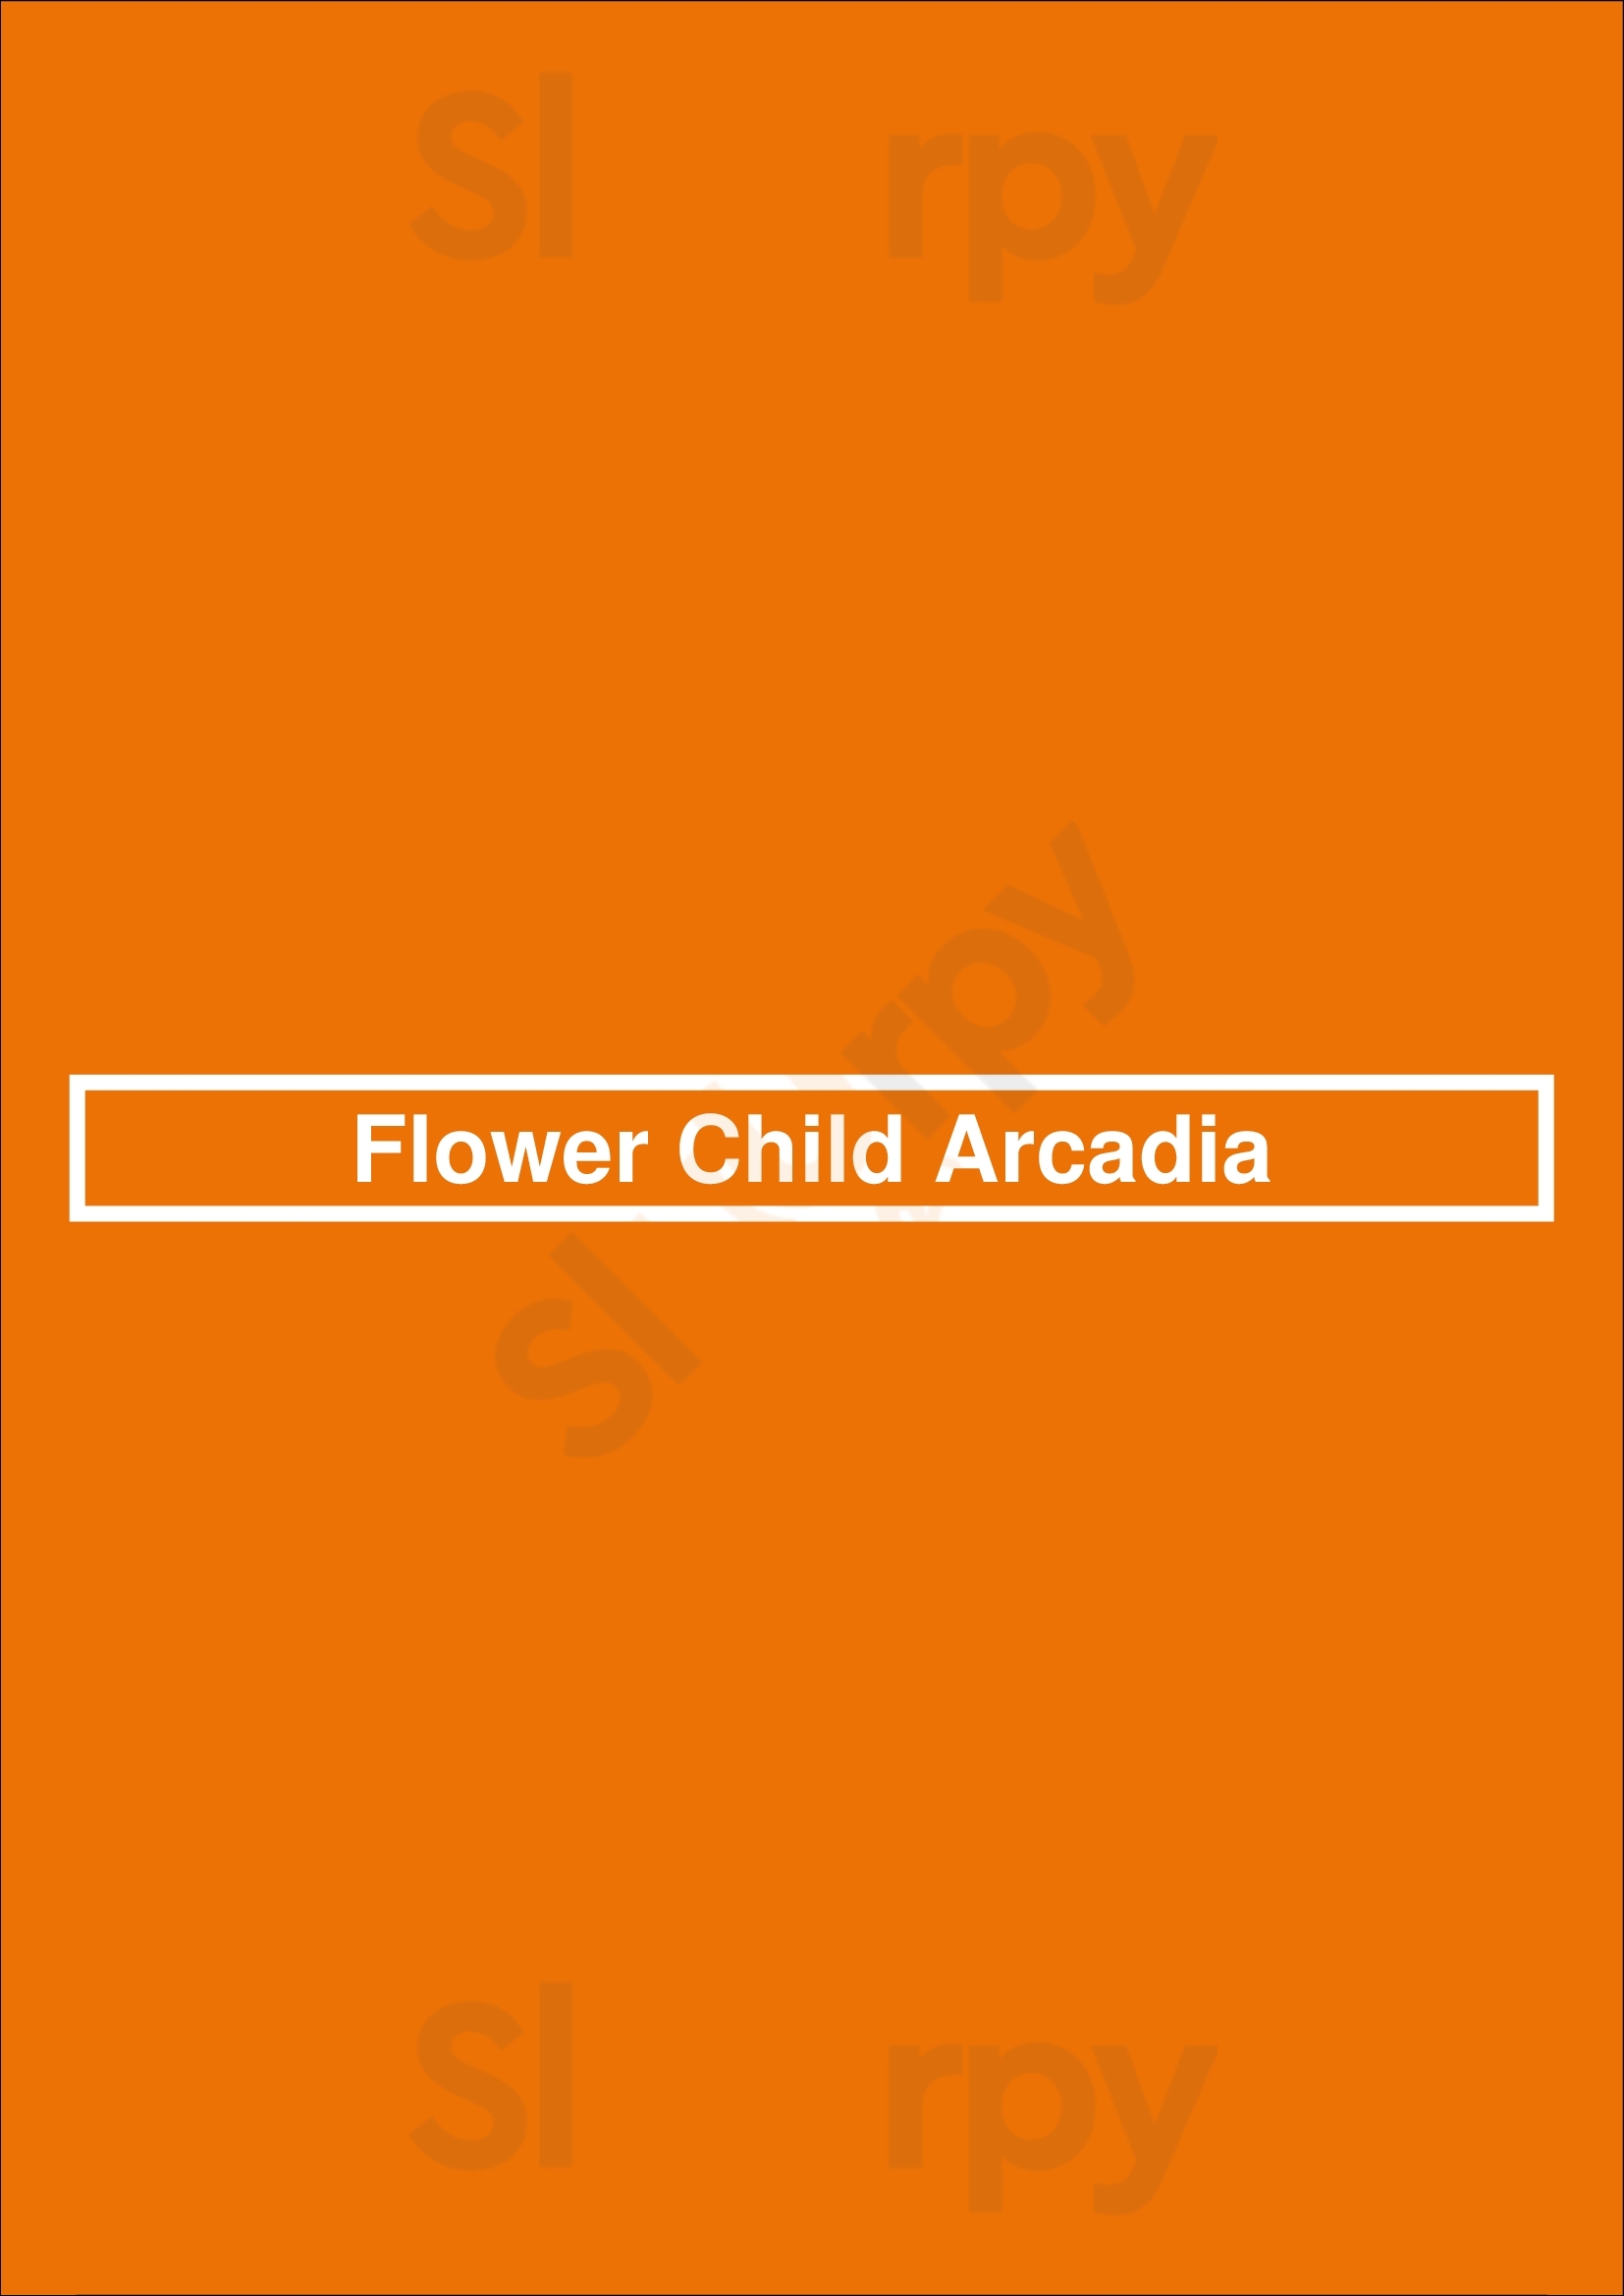 Flower Child Phoenix Menu - 1